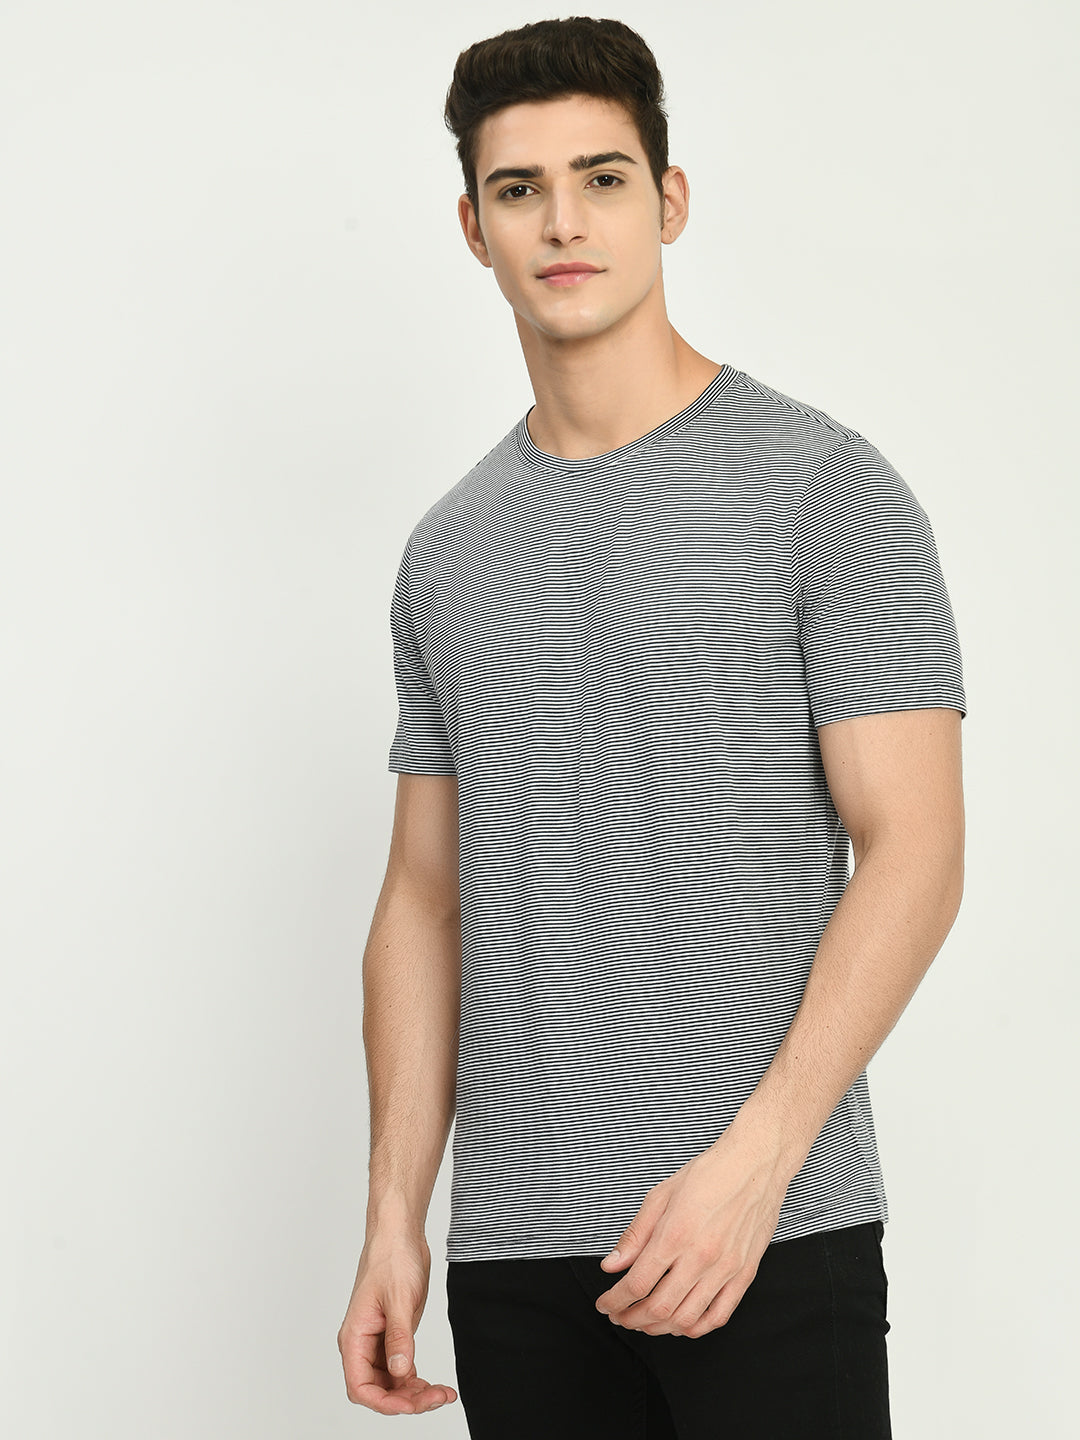 Men's Gray White Striped Crew Neck T-Shirt